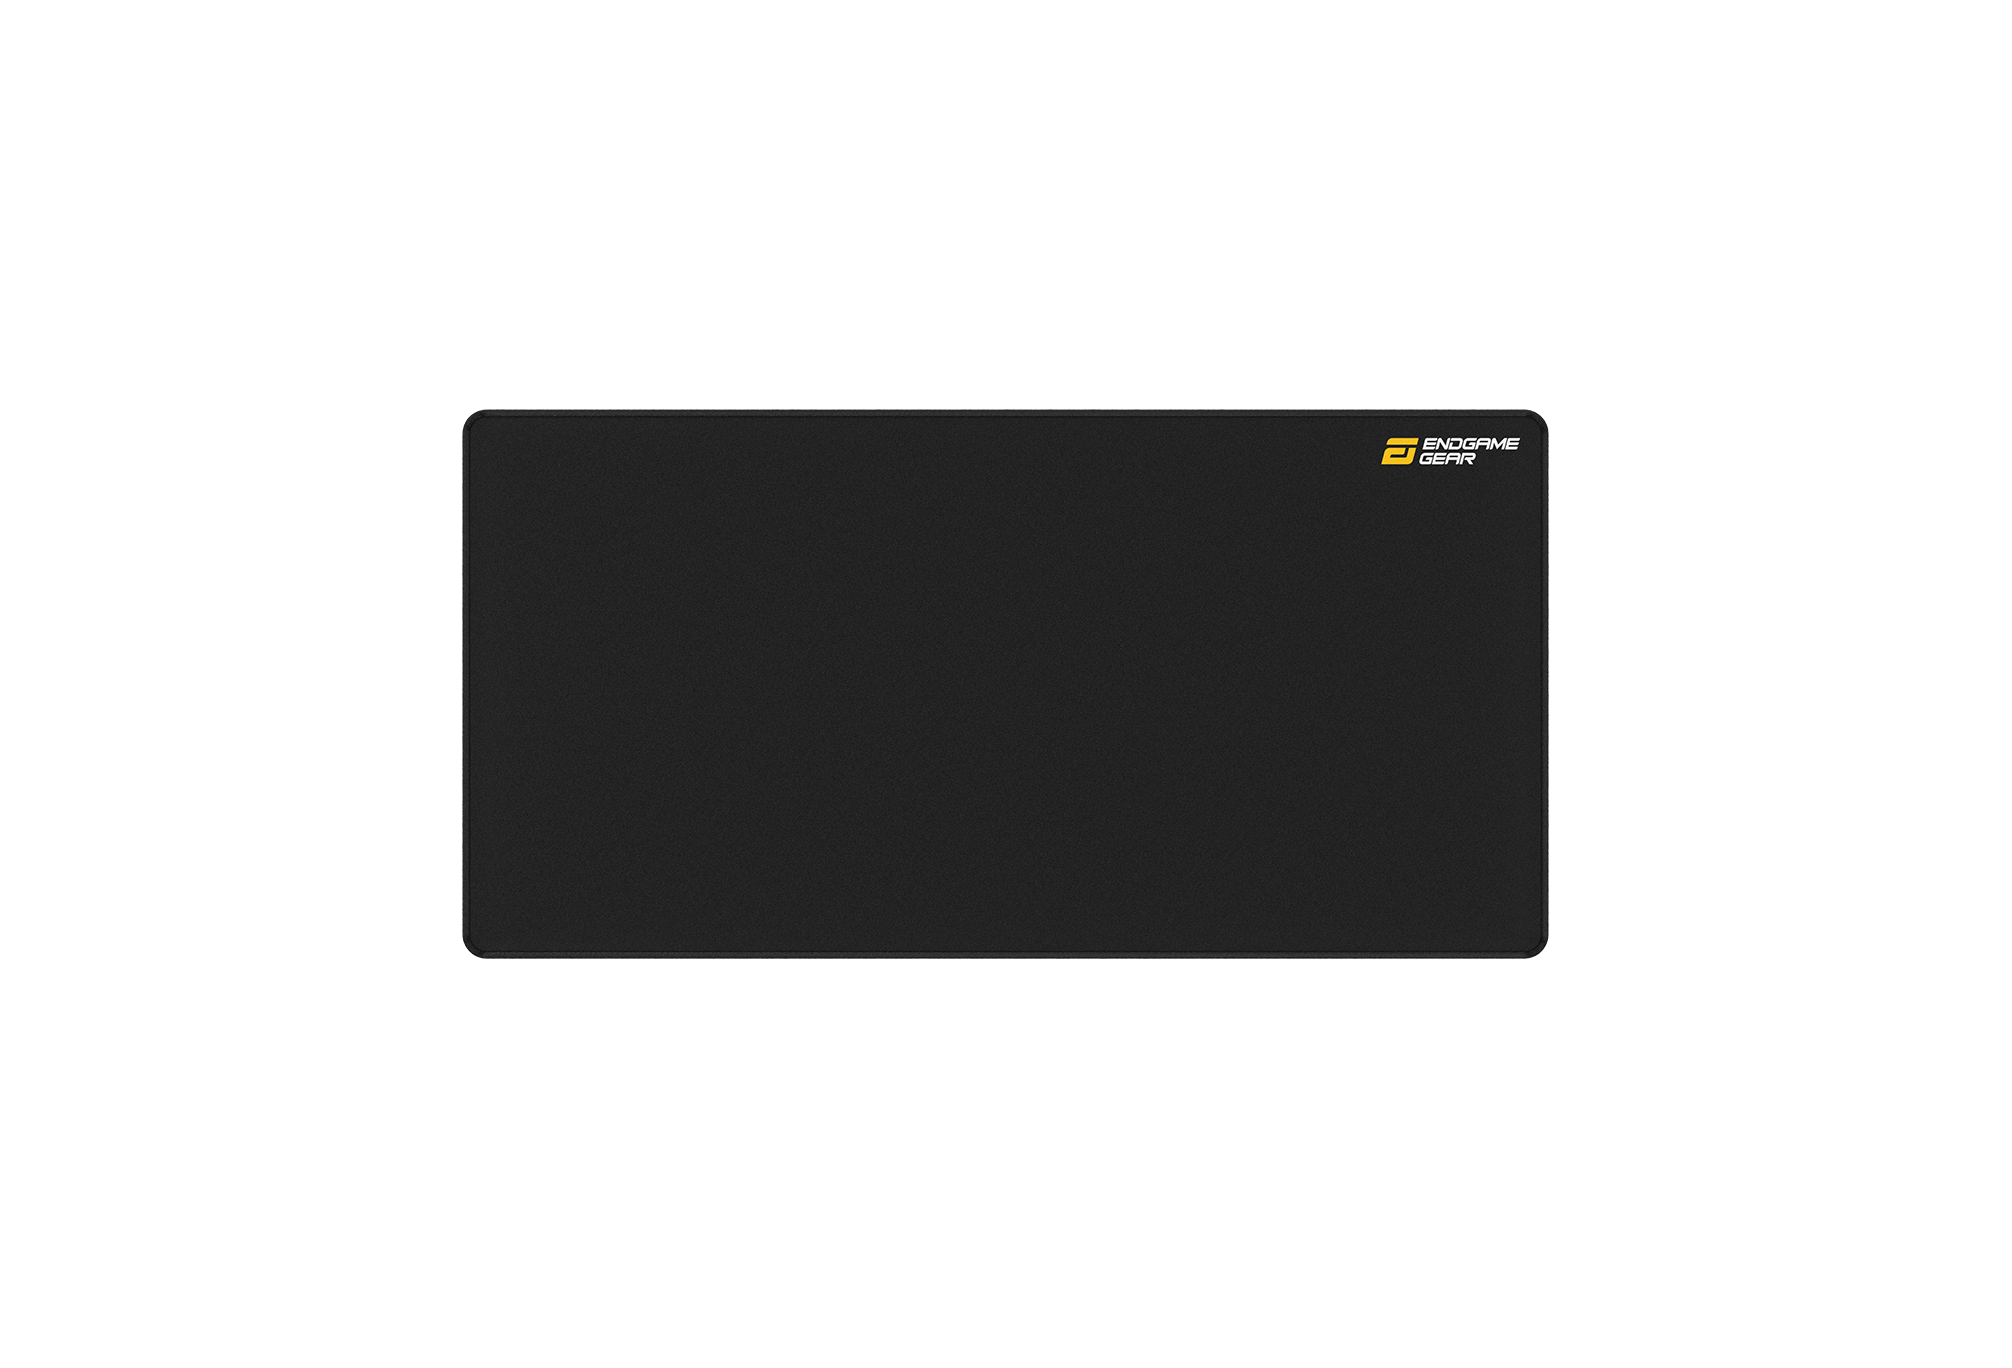 Endgamegear - MPJ890 Mousepad Black